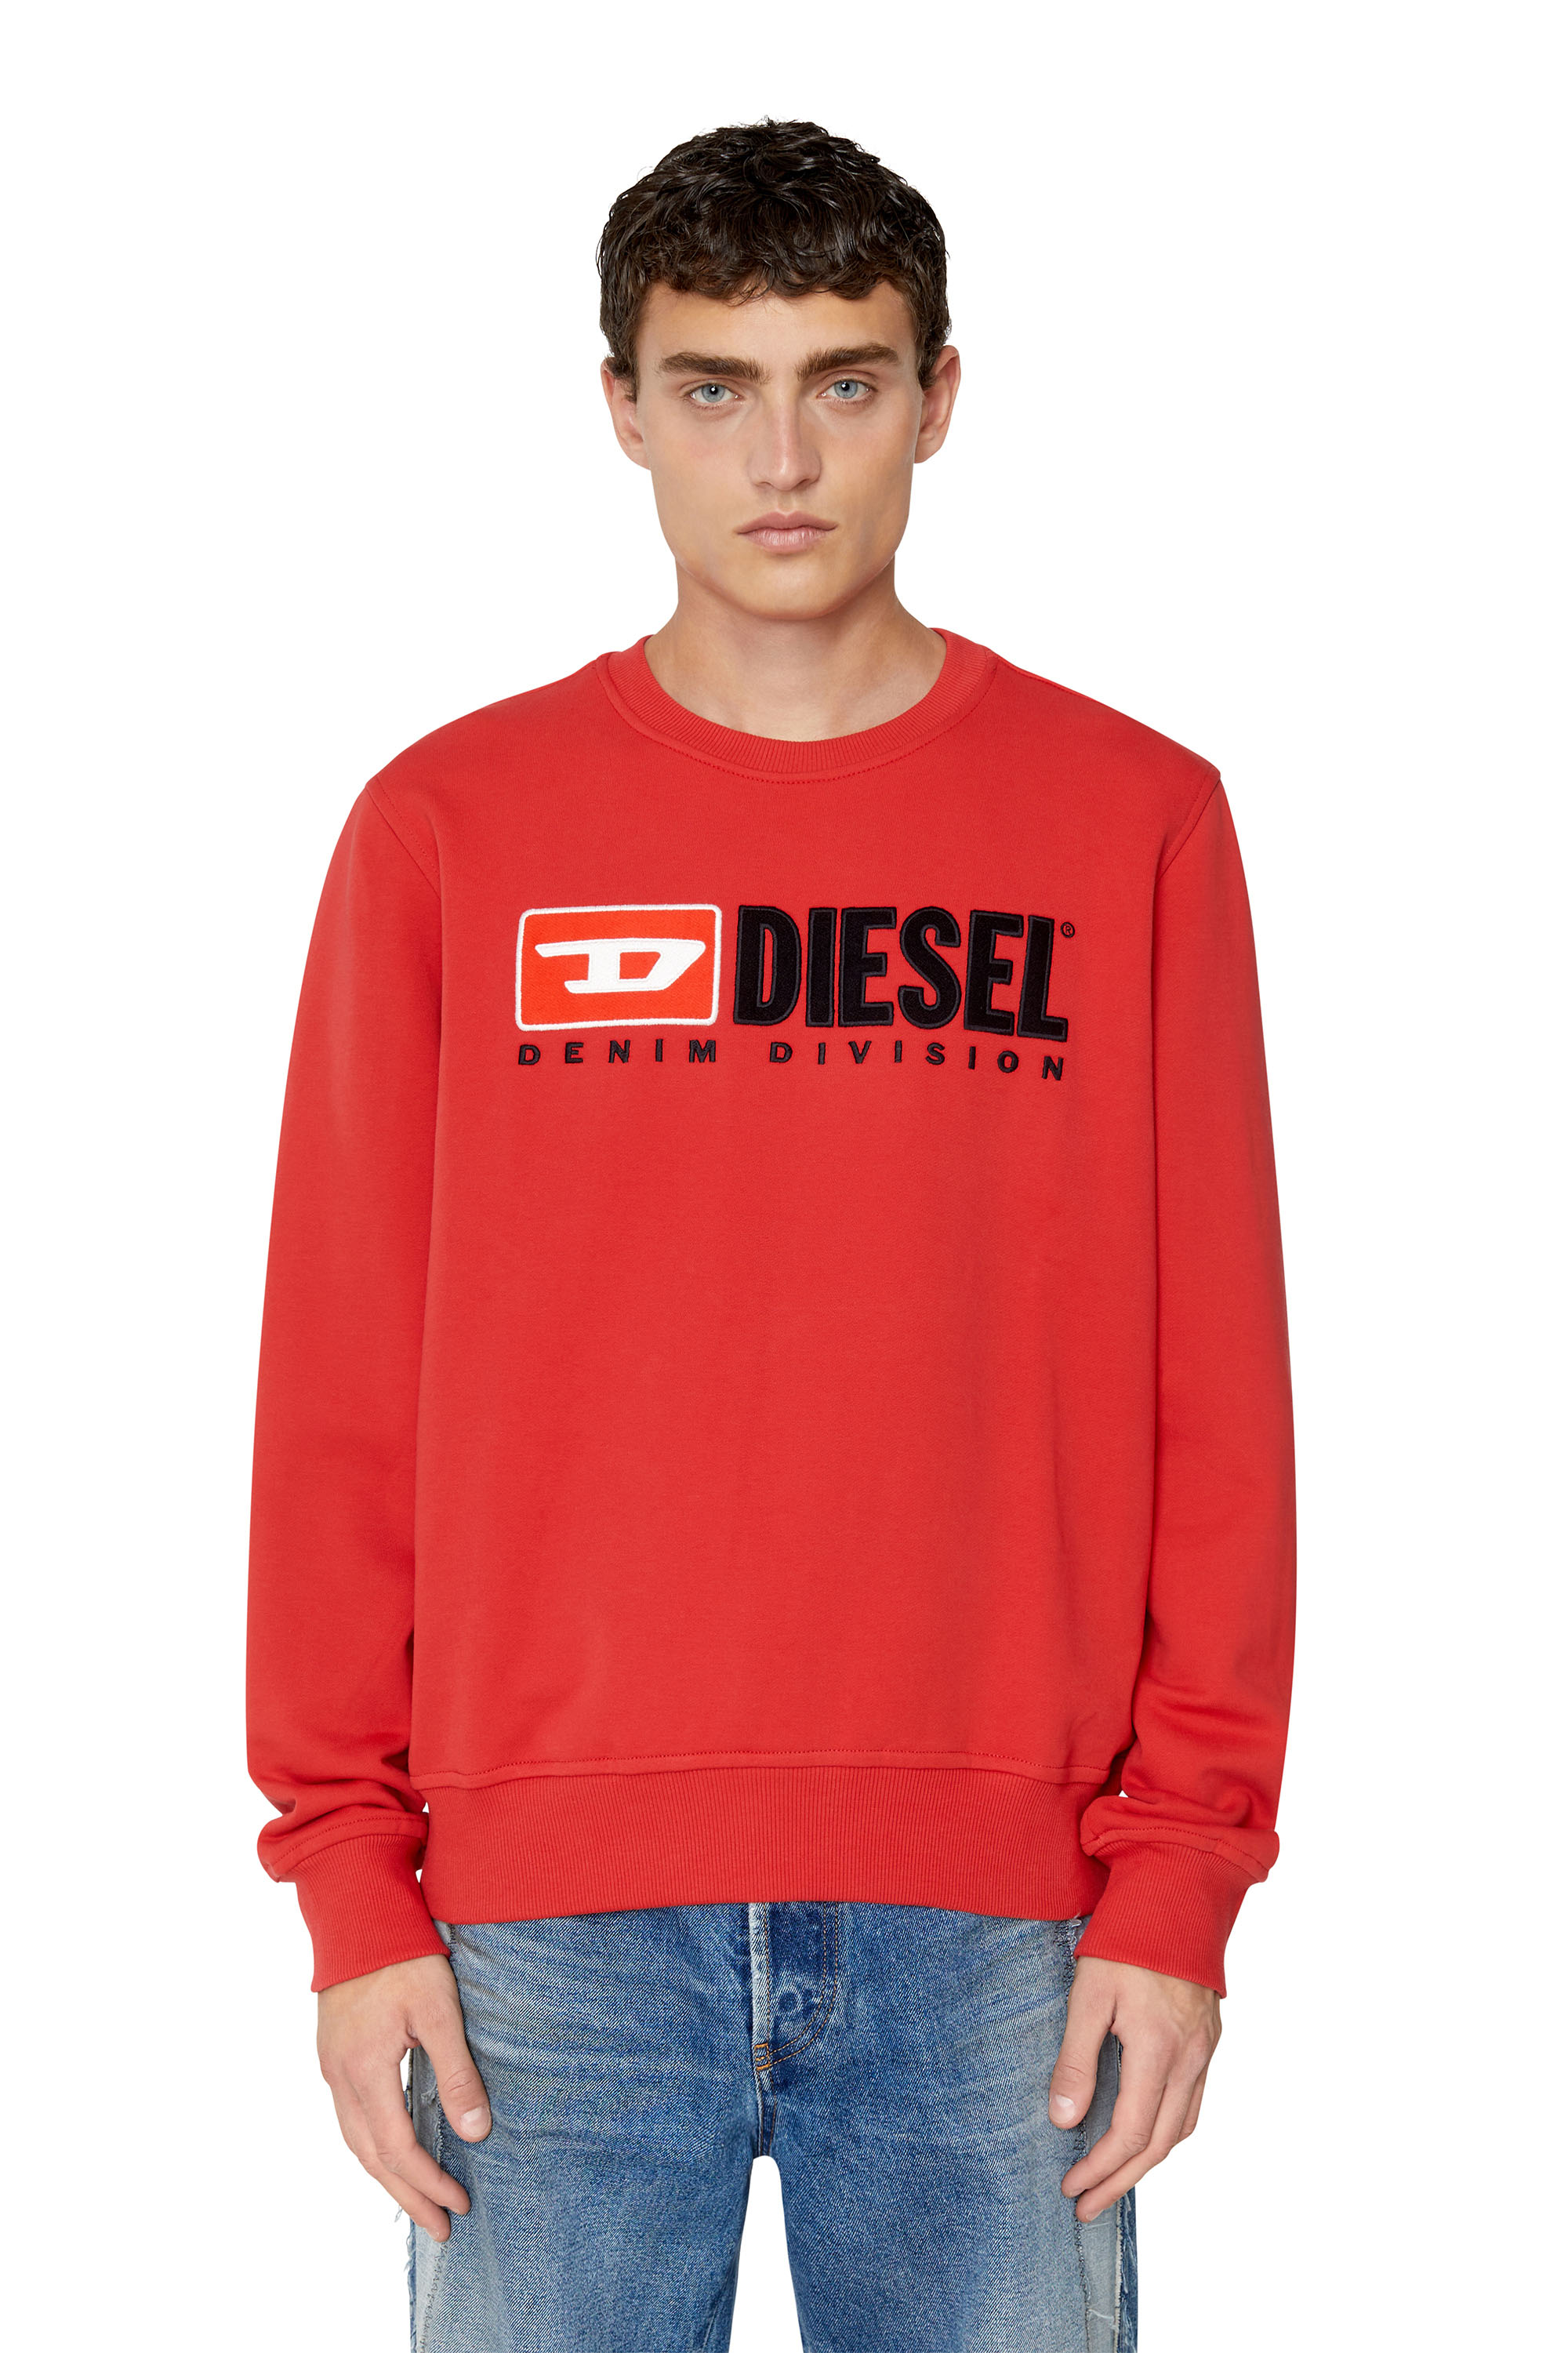 Diesel - S-GINN-DIV, Red - Image 2